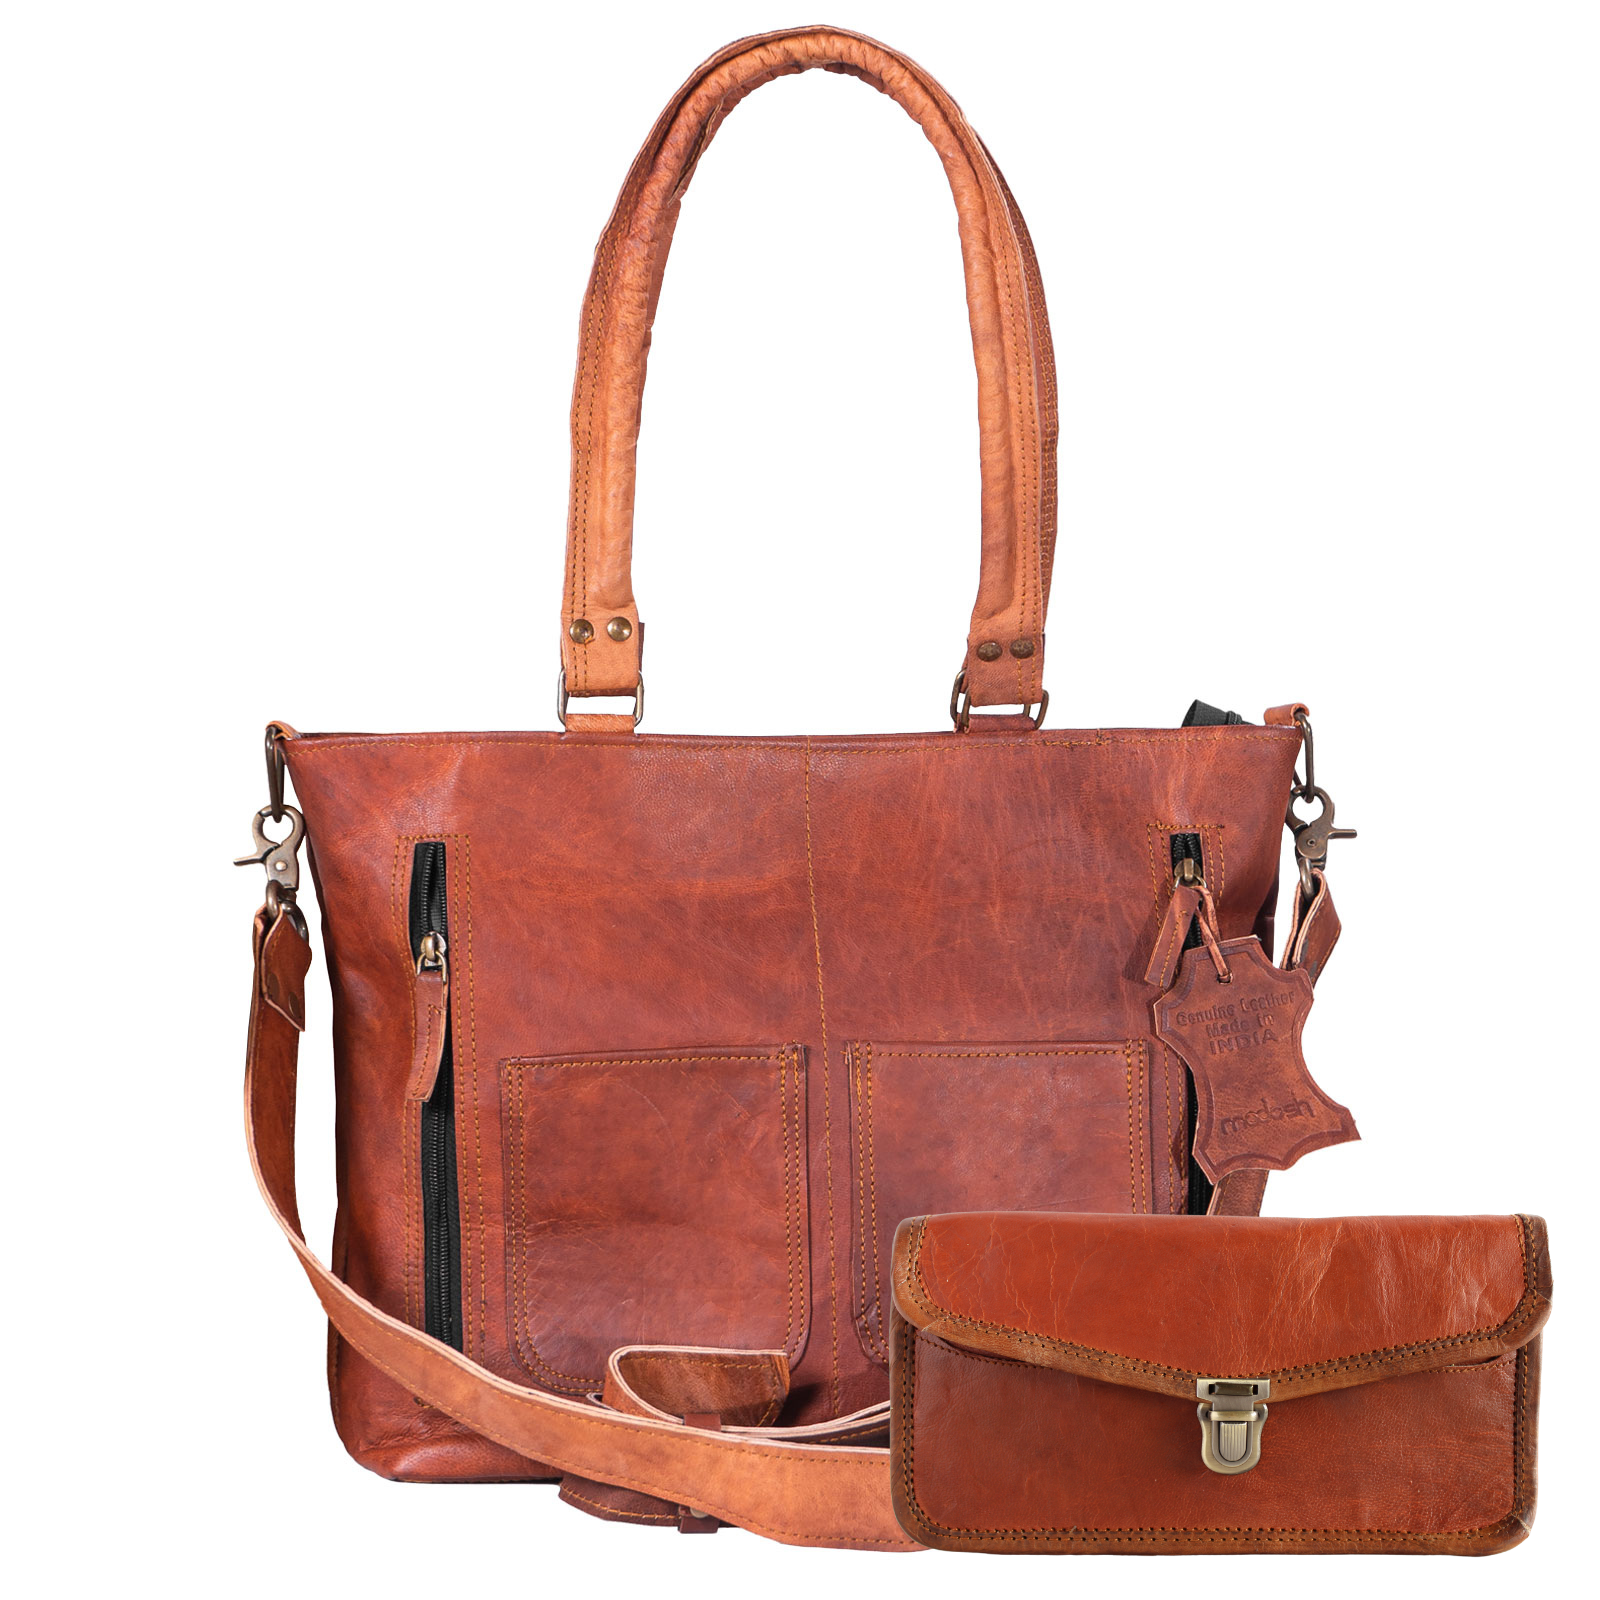 Madosh Womens Tote Handbag Genuine Leather Shoulder Purse Satchel Crossbody Ladies Brown Bag - image 1 of 6